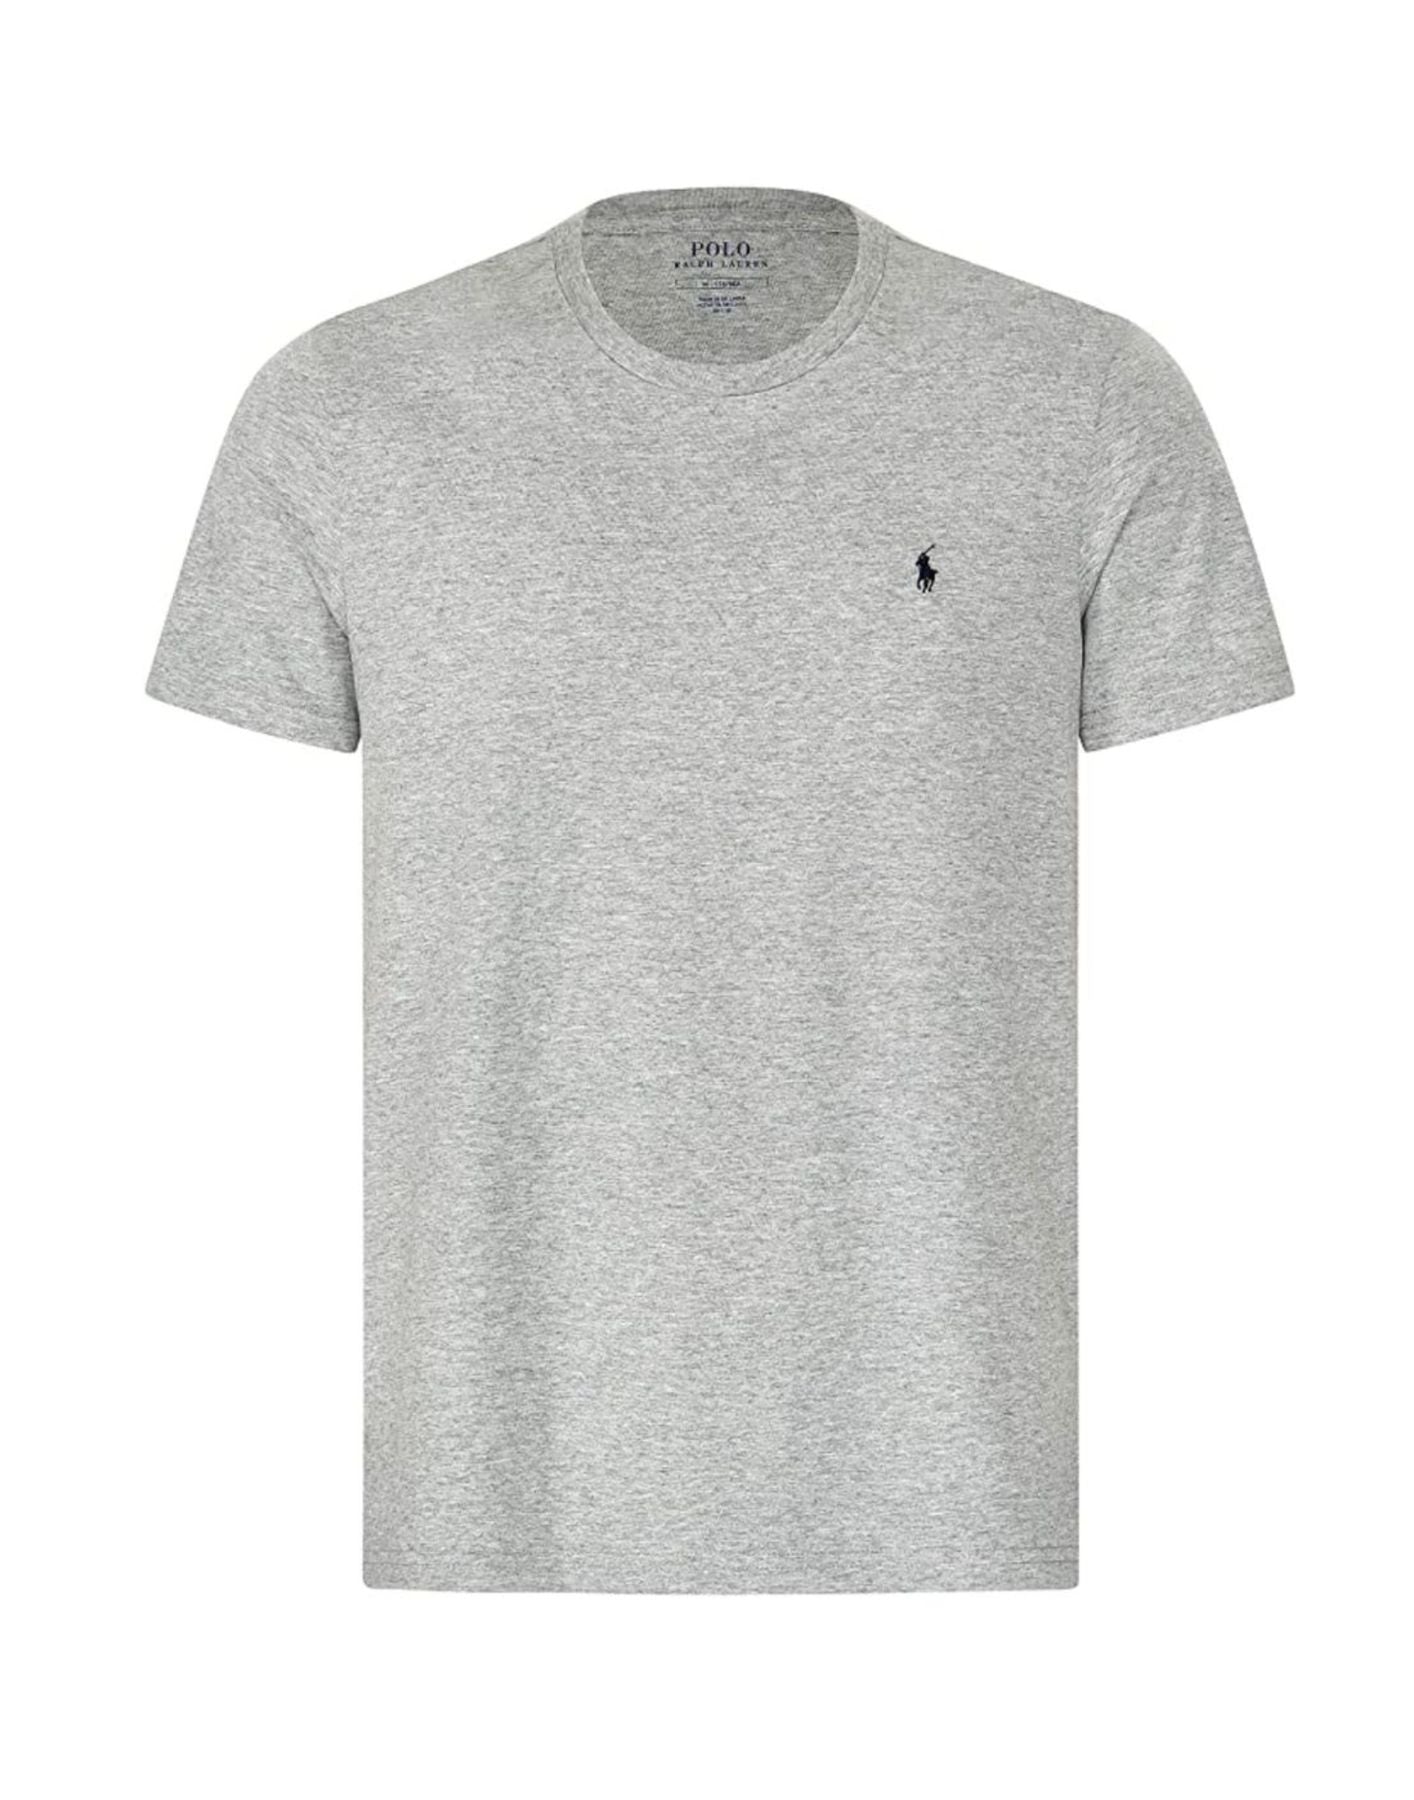 Camiseta hombre 714844756003 gris Polo Ralph Lauren